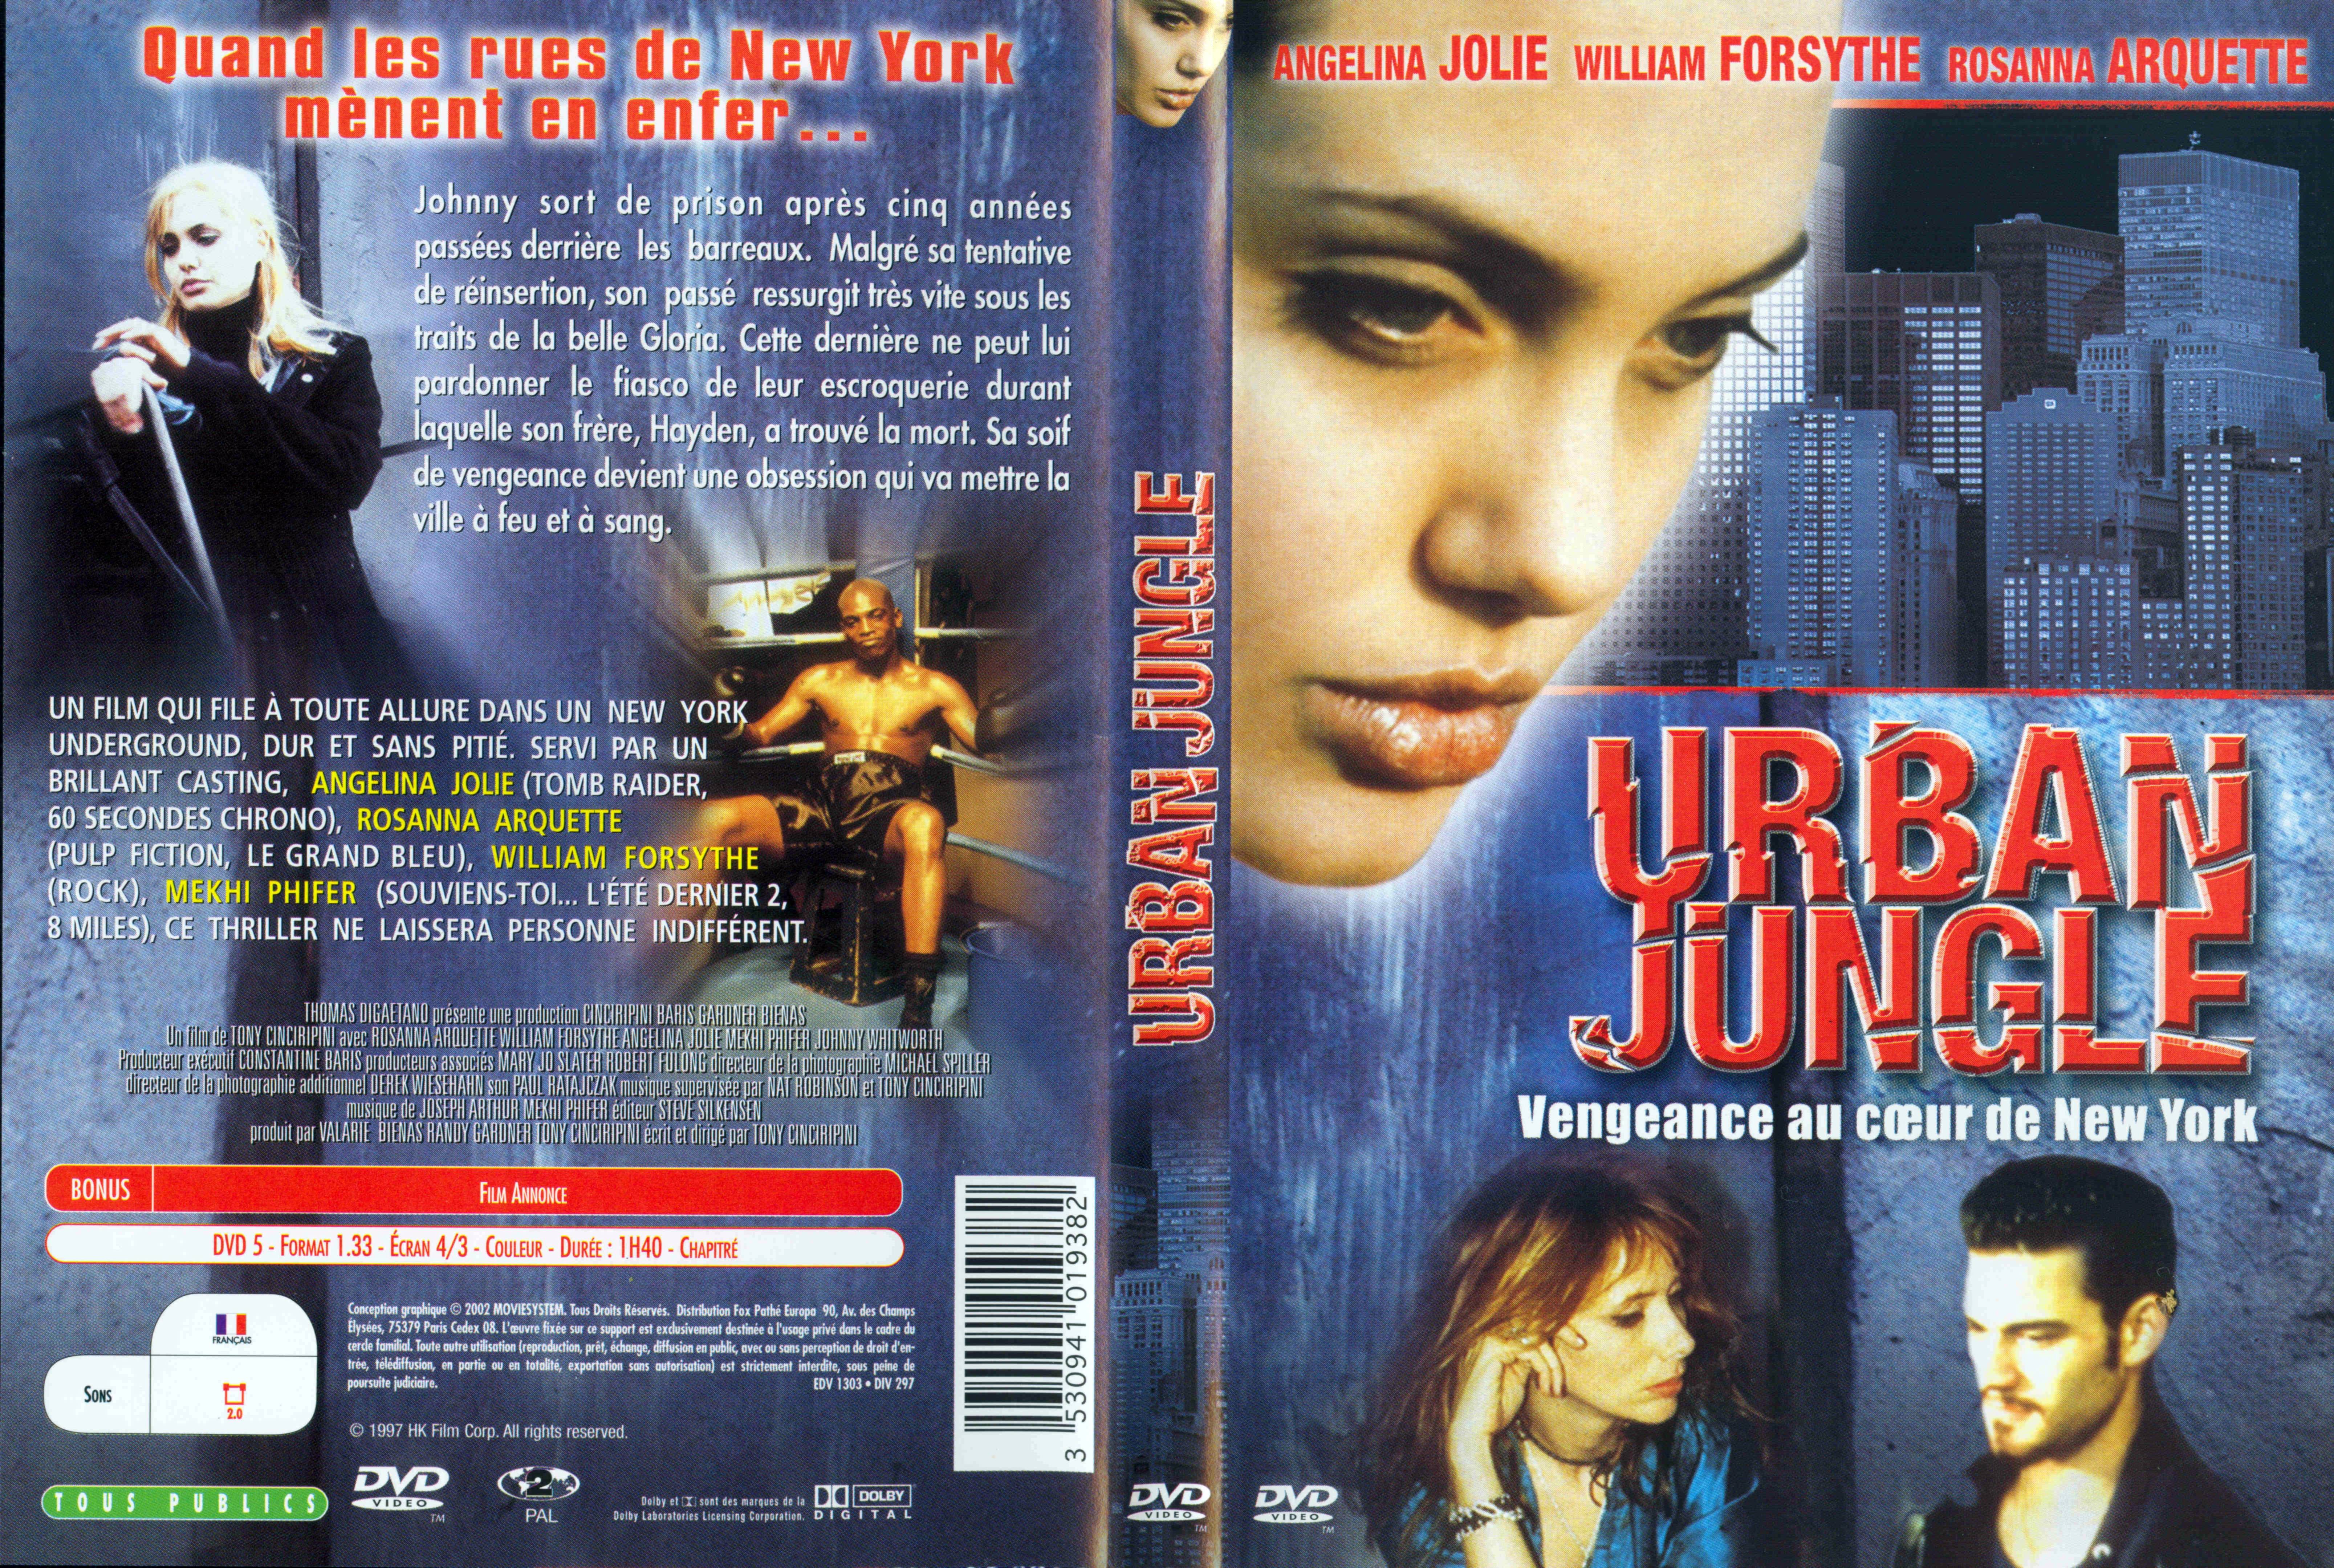 Jaquette DVD Urban jungle